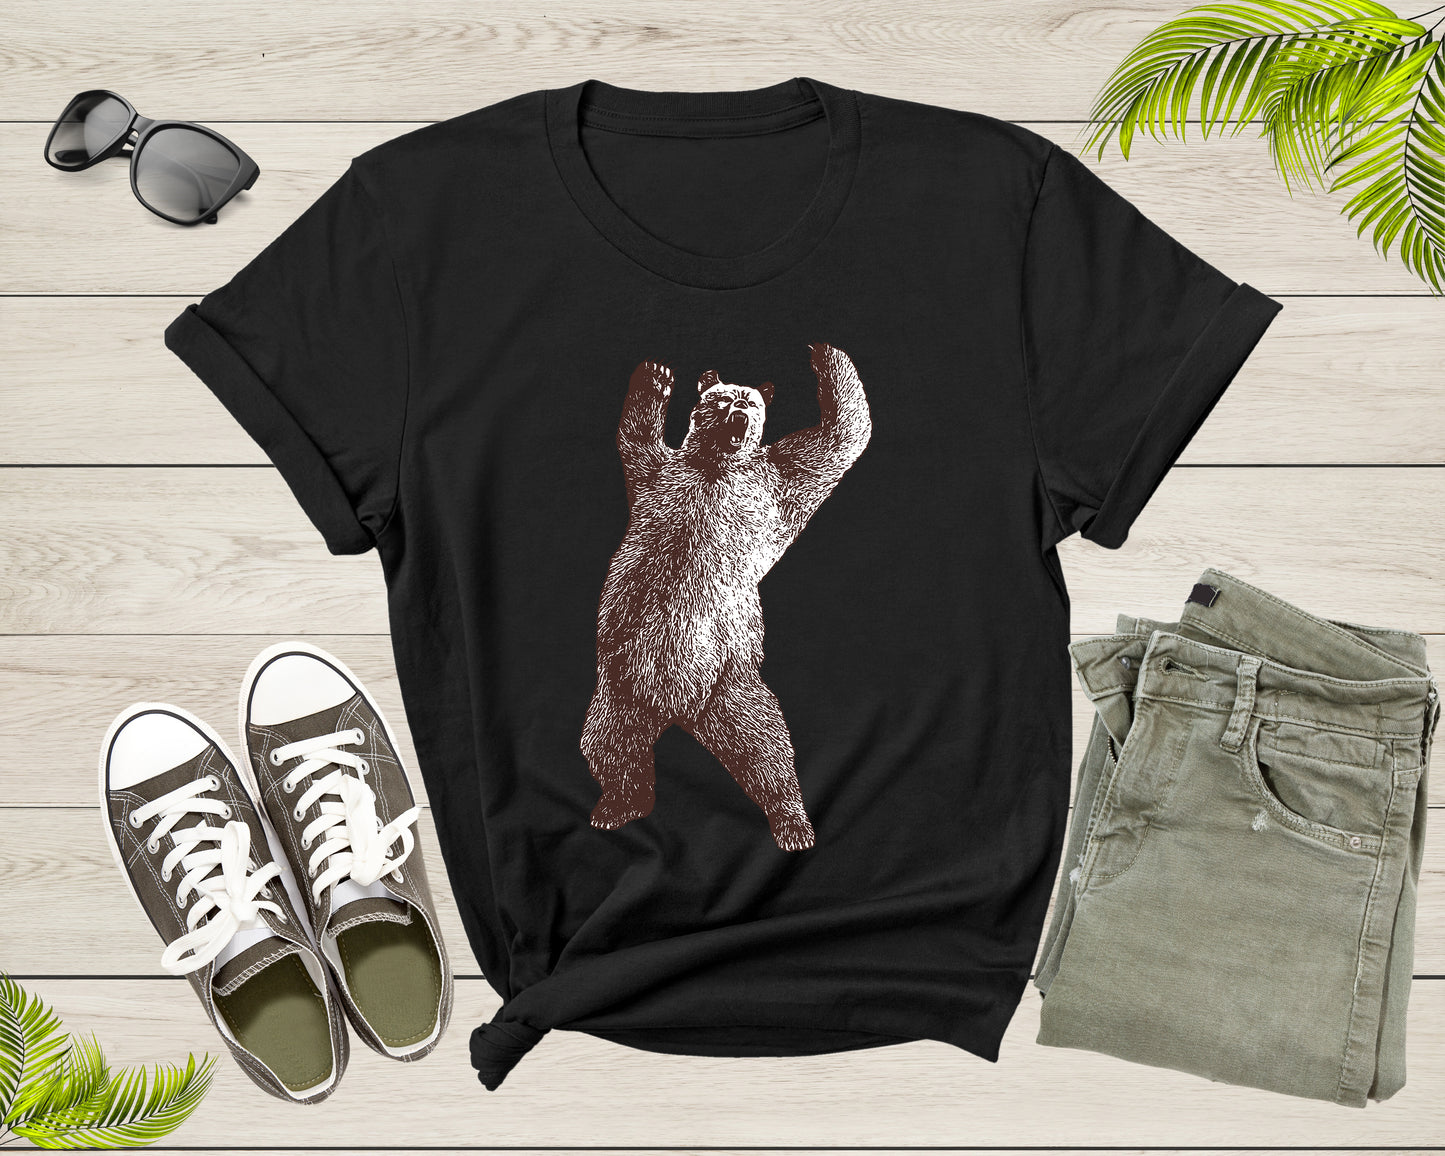 Roaring Grizzly Brown Bear Standing on Feet Cool Giant Bear T-Shirt Cool Bear Lover Gift T Shirt for Men Women Kids Boys Girls Tshirt